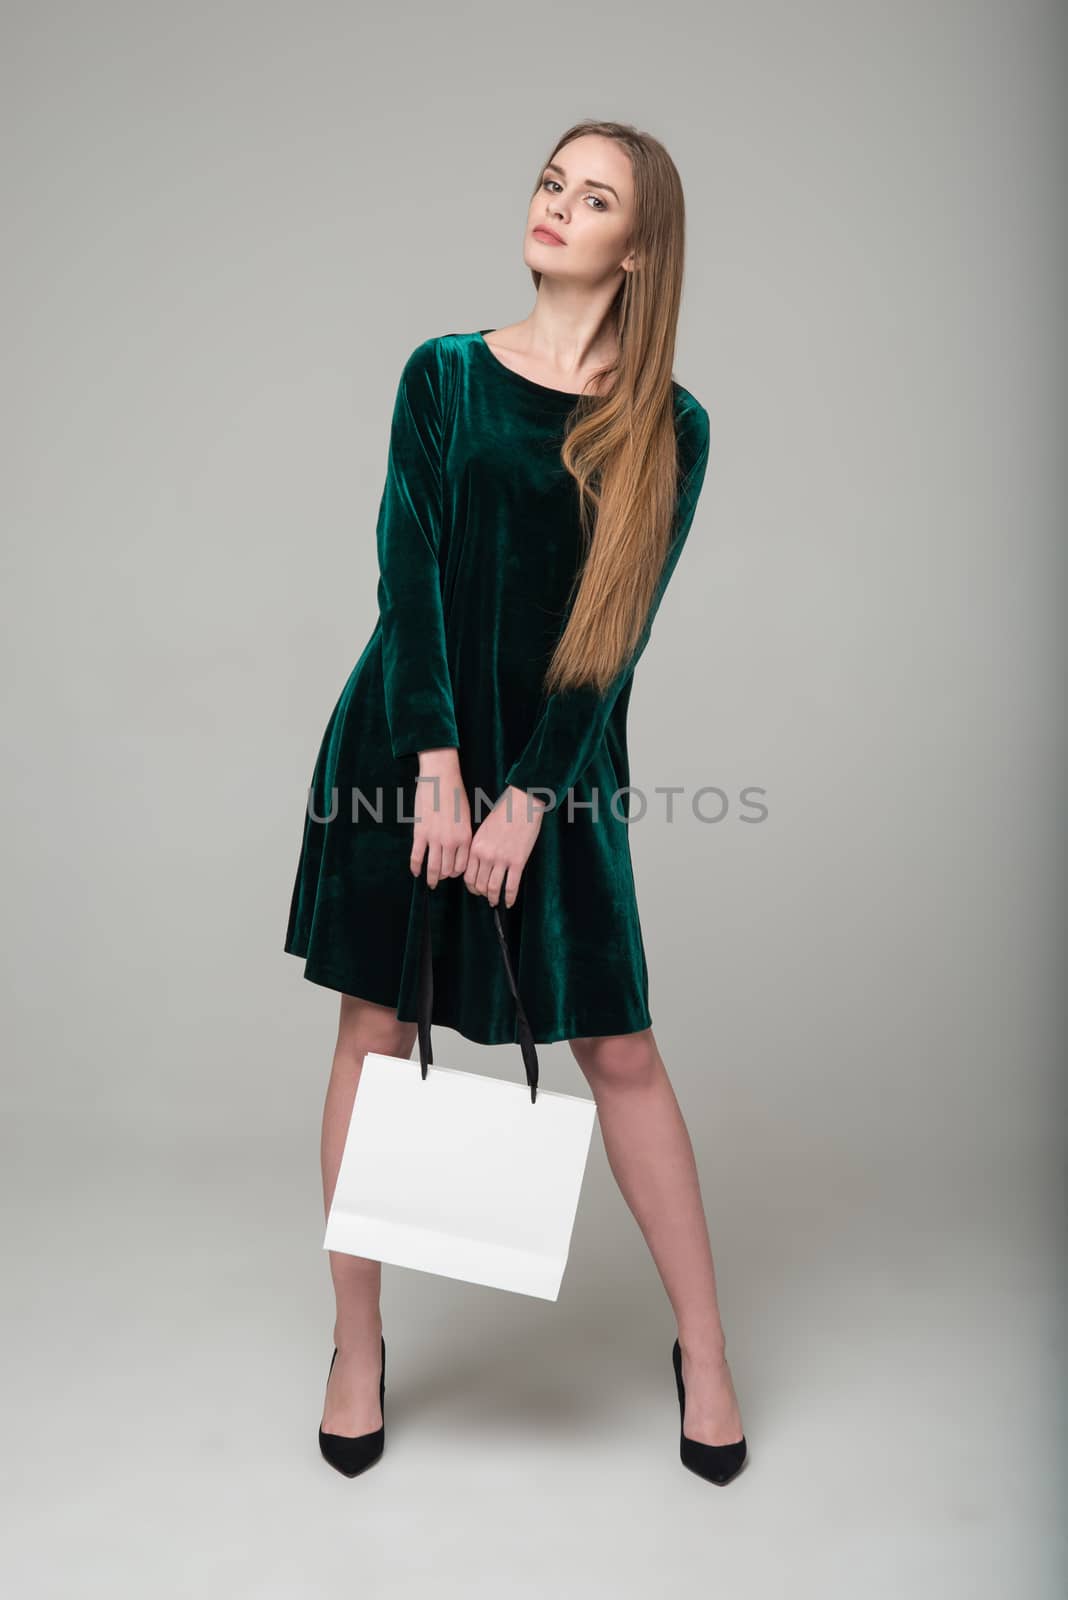 Blond girl in dark green short dress with white bag by VeraVerano